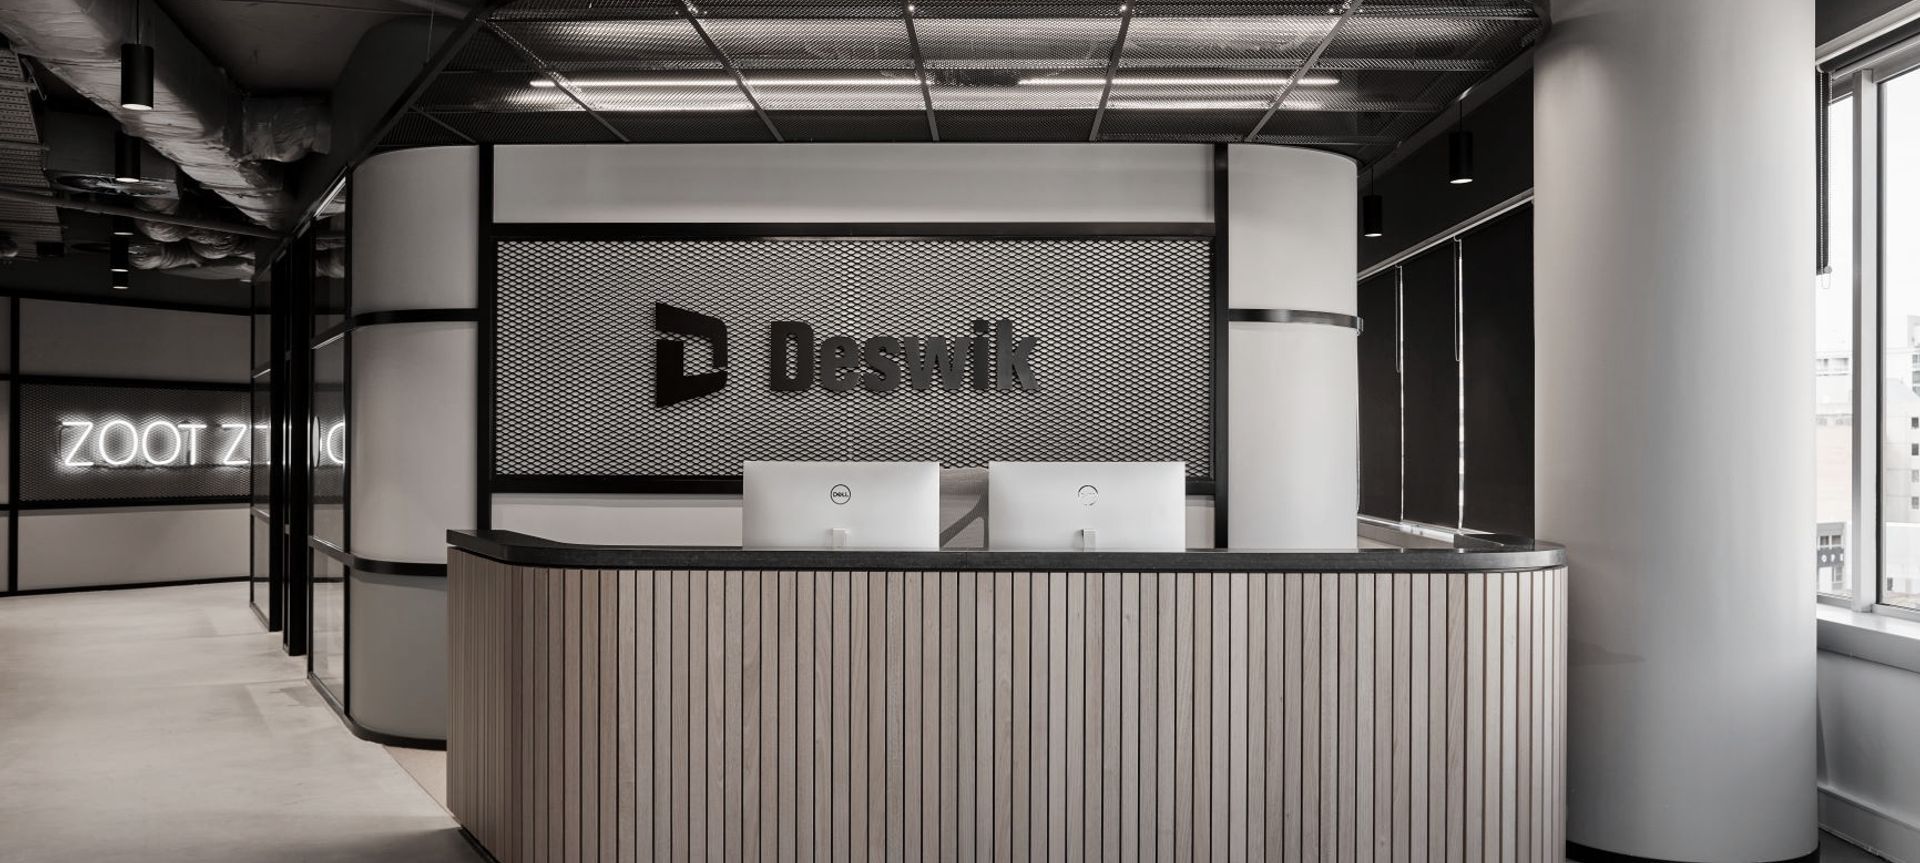 Deswik Head Office banner